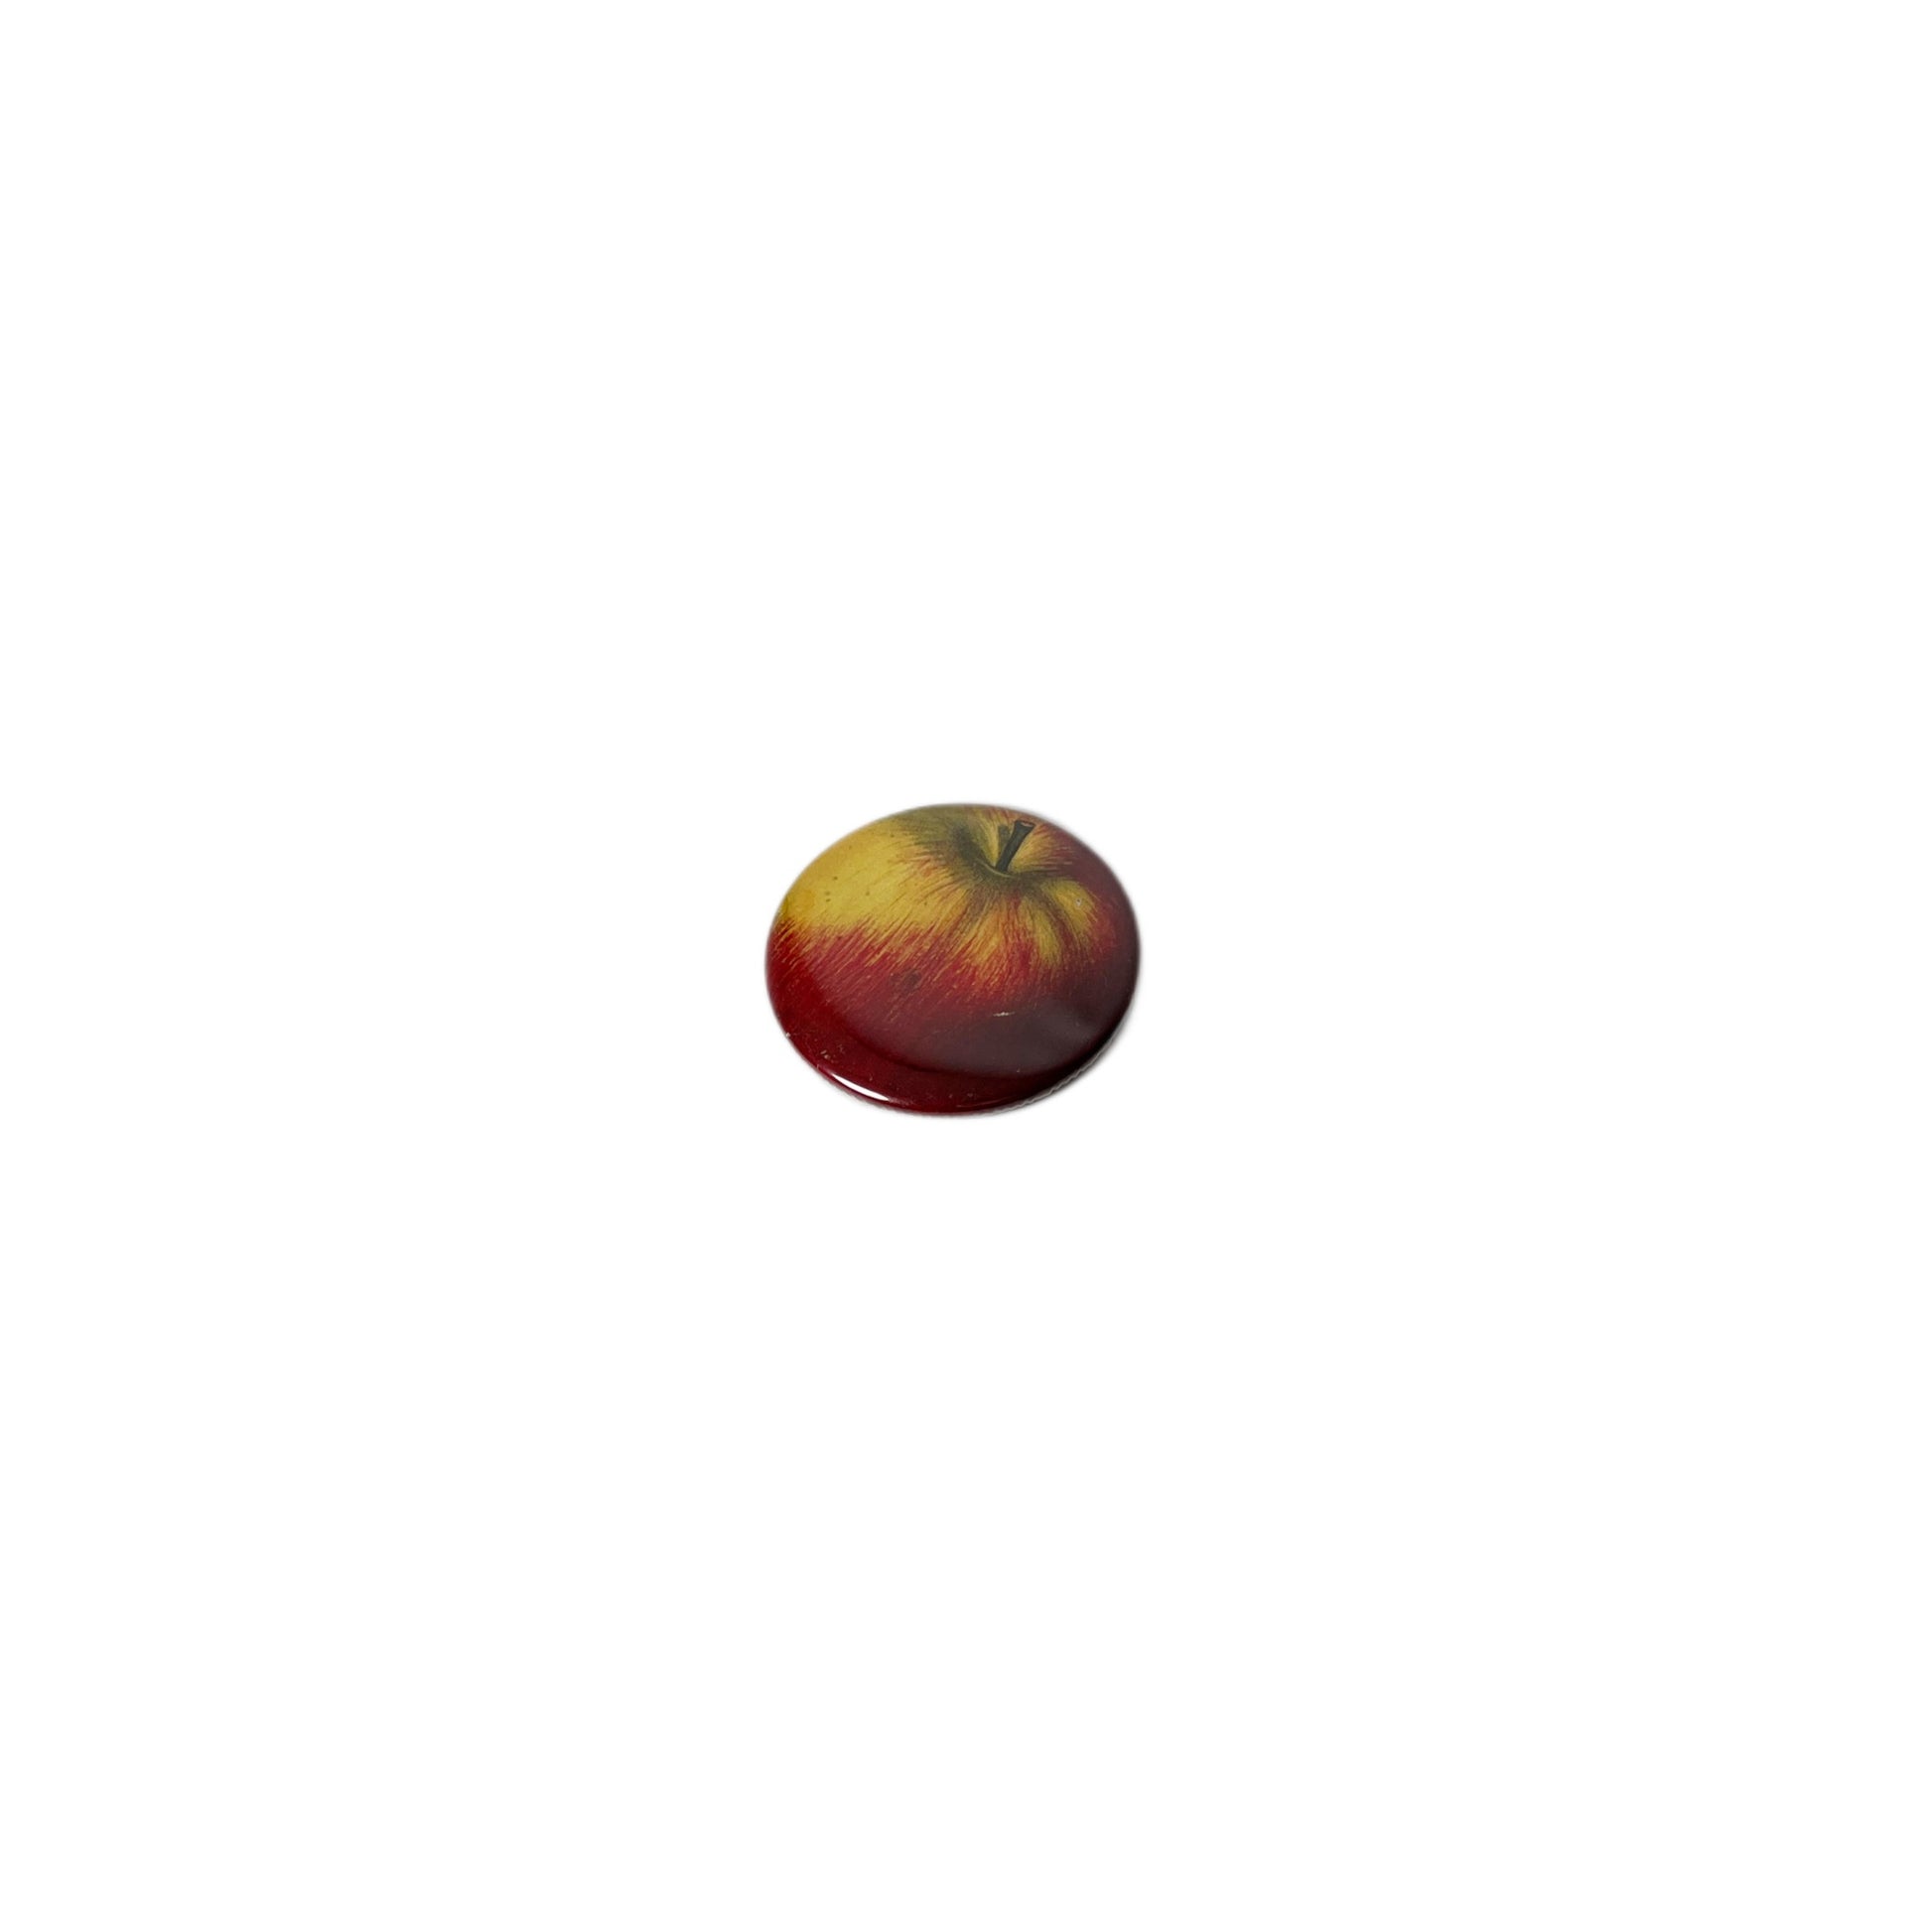 【JOHN DERIAN】ポケットミラー Red Apple